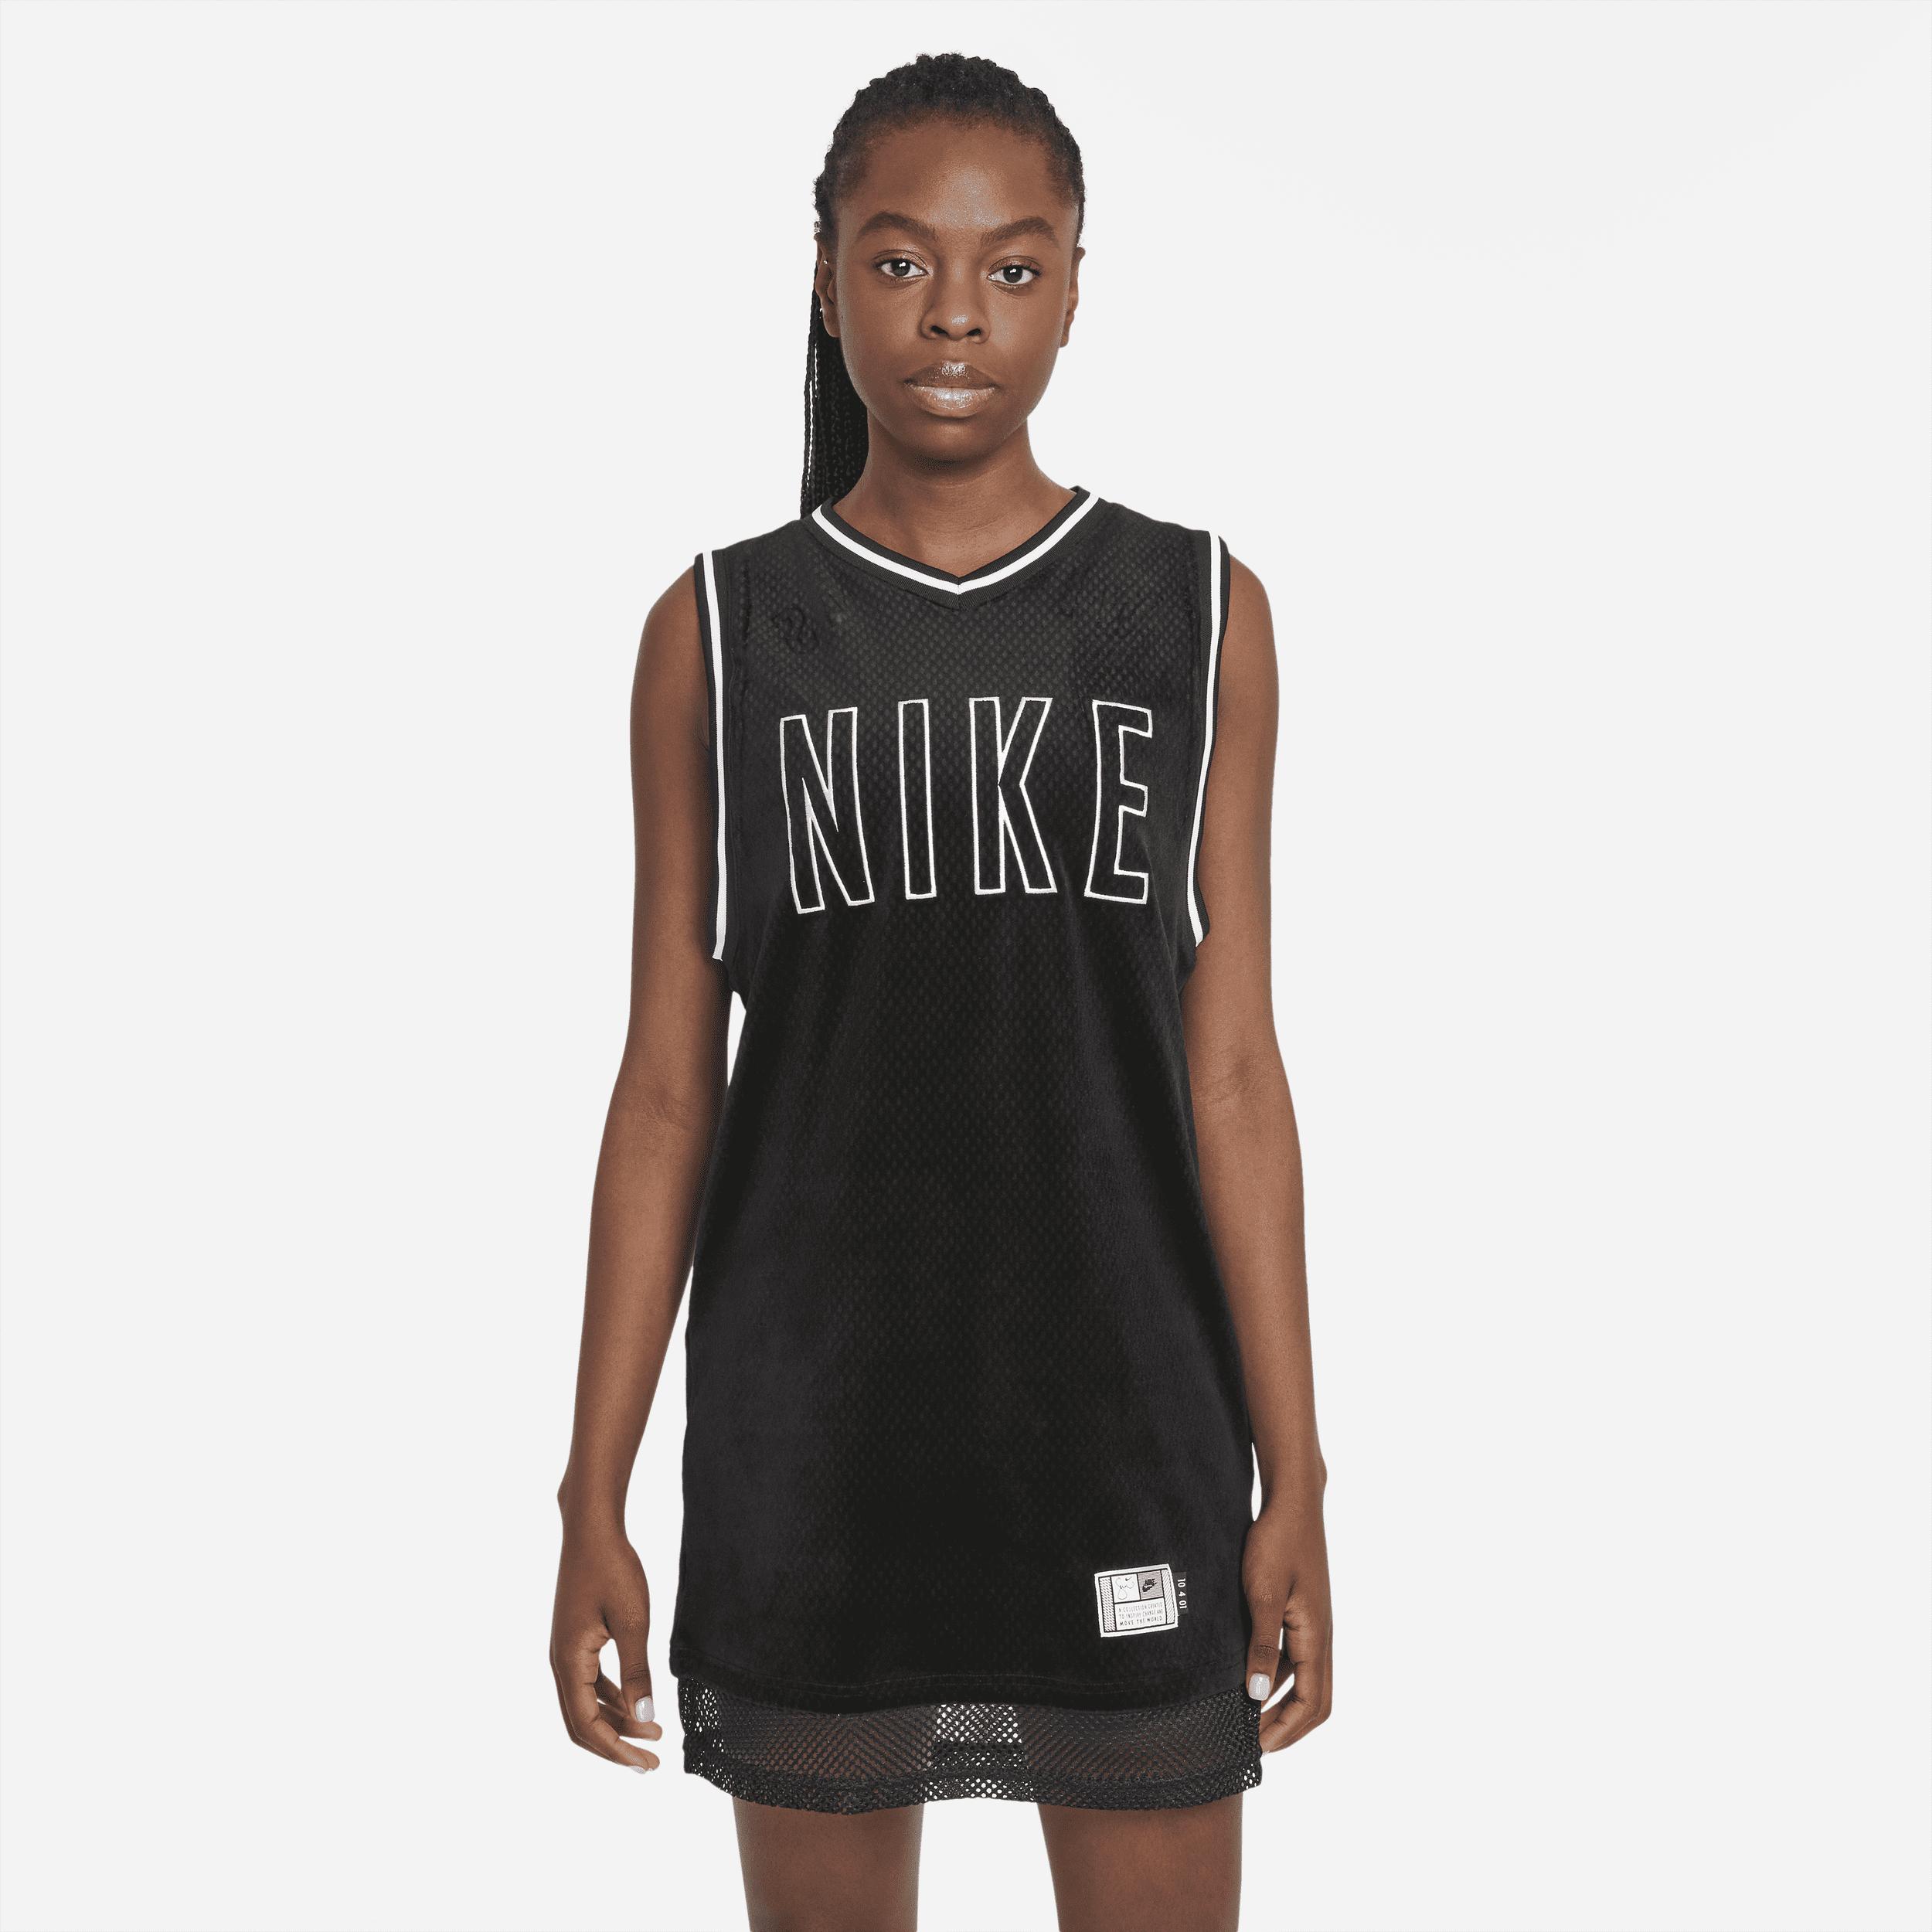 Nike Serena Williams Design Crew Tennis Jersey Dress in Black | Lyst